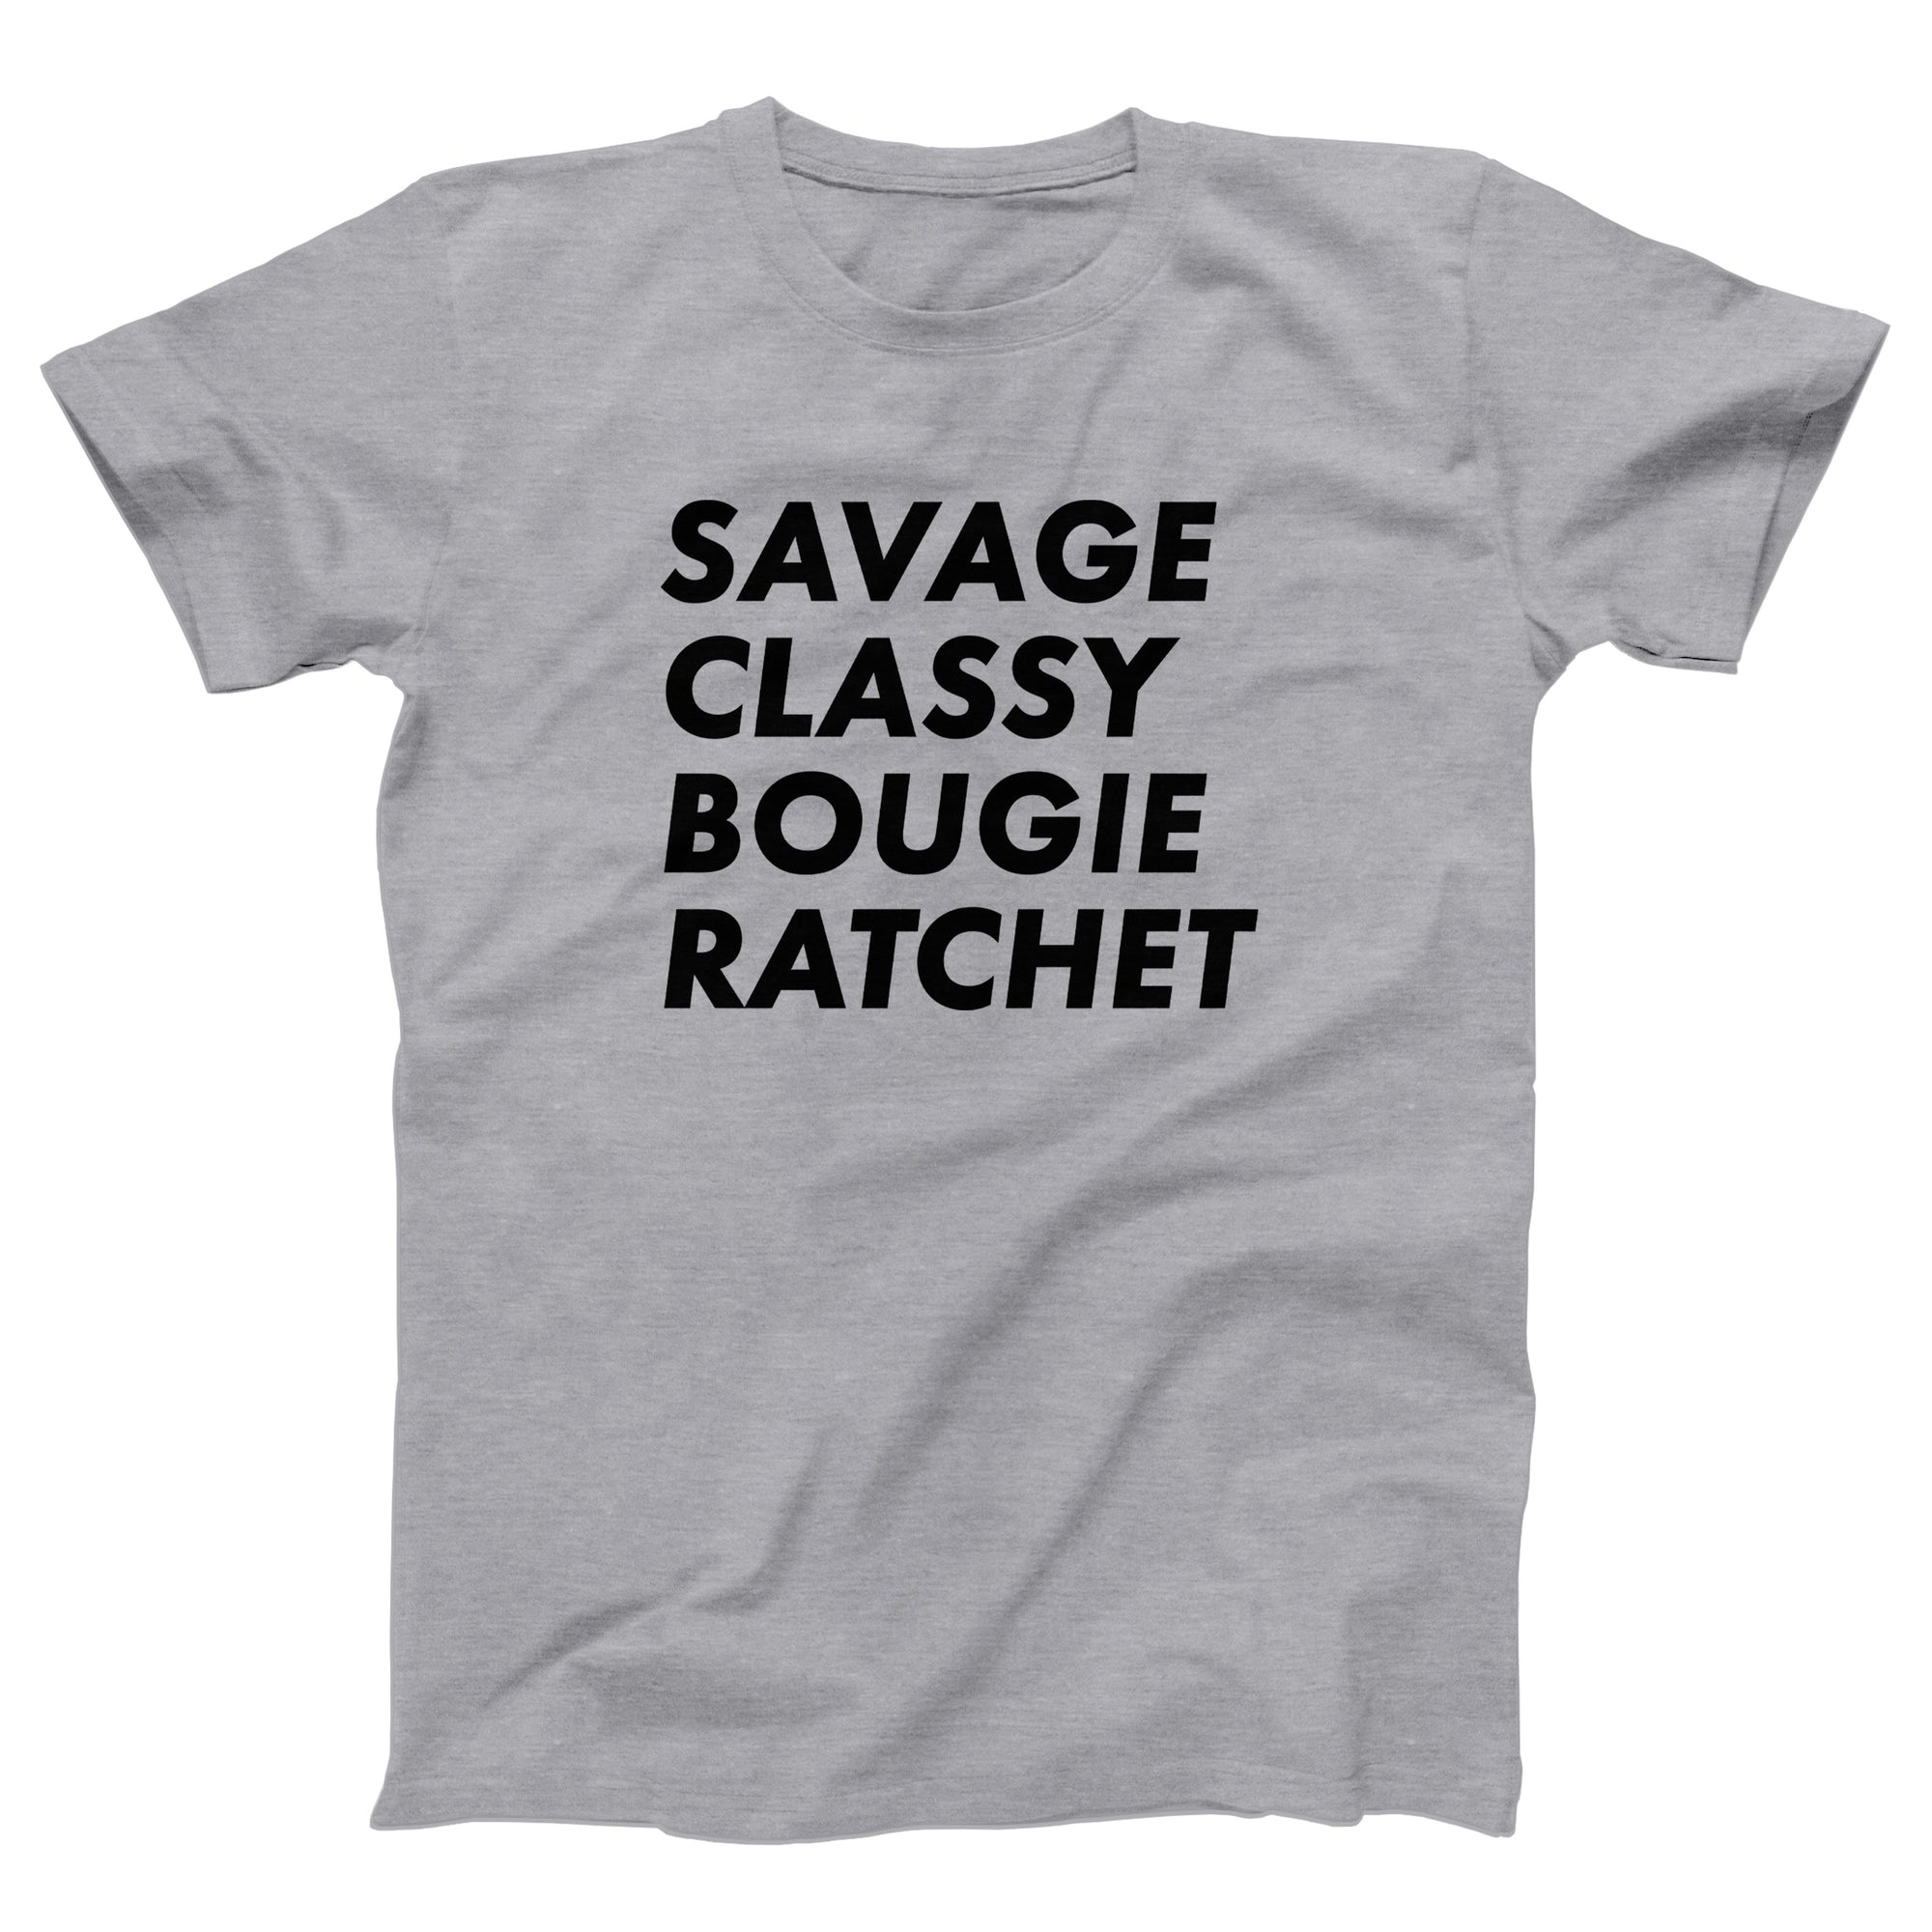 Savage Classy Bougie Ratchet Adult Unisex T-Shirt - anishphilip